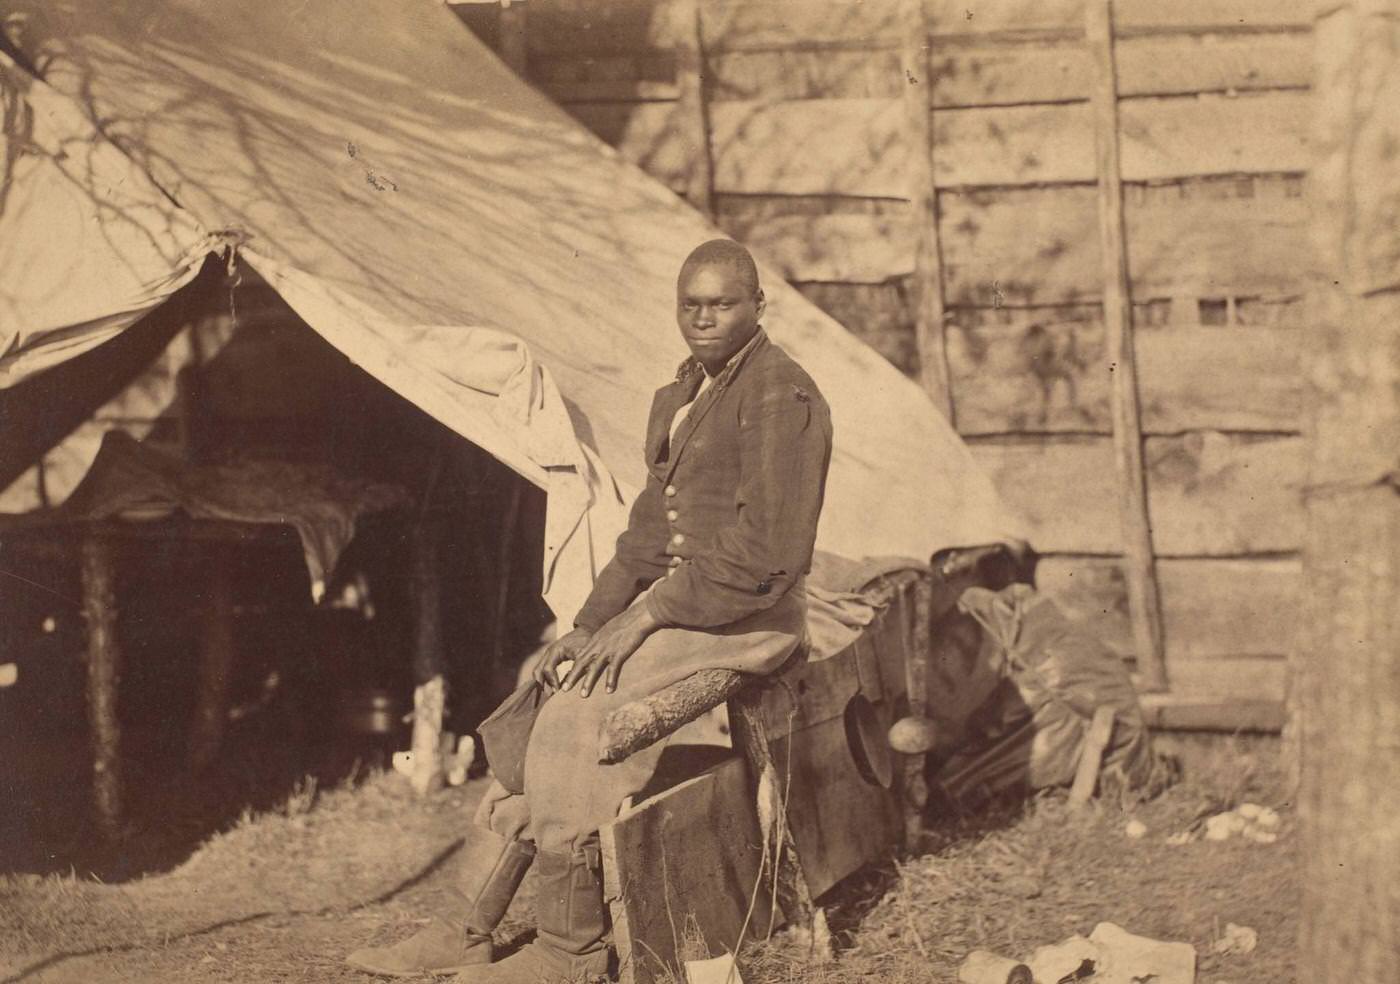 Black Soldier in Camp, Washington, D.C., 1863